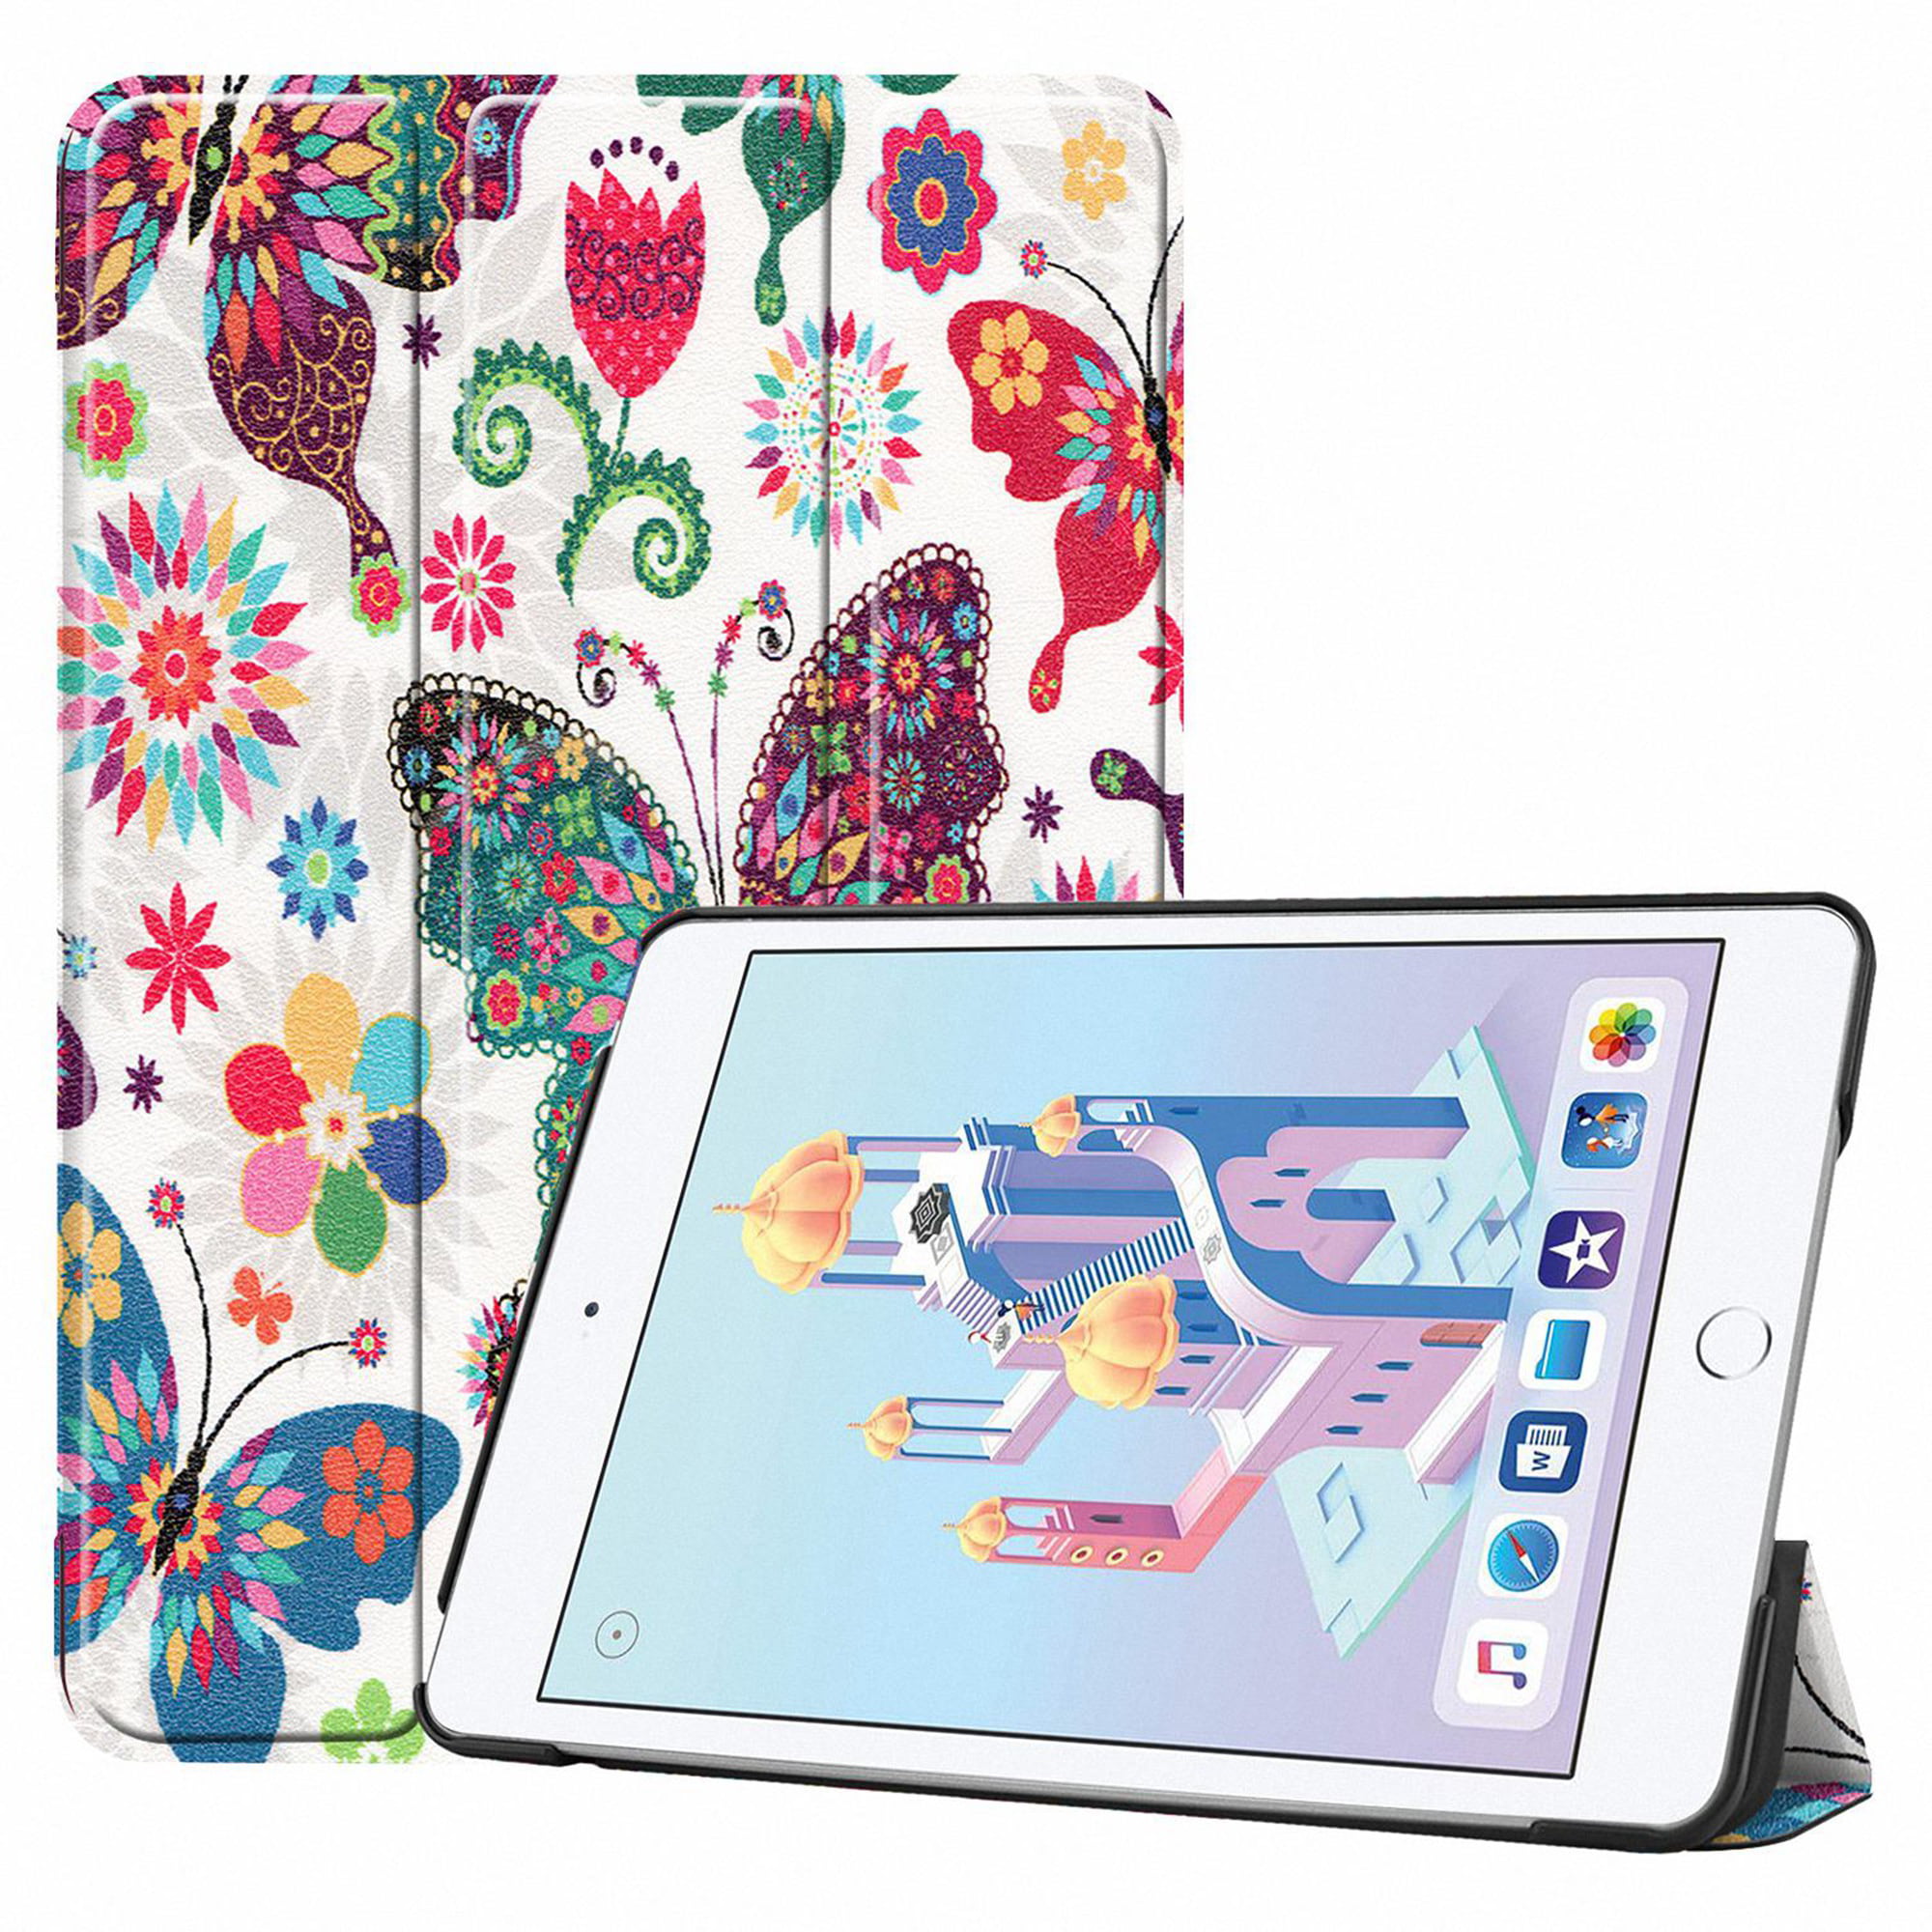 Femkeva iPad Mini 5 Smart Case Colorful Pattern Ultra Slim Lightweight Stand Auto Sleep/Wake Cover for iPad Mini 5 7.9 2019 New iPad Mini 2019